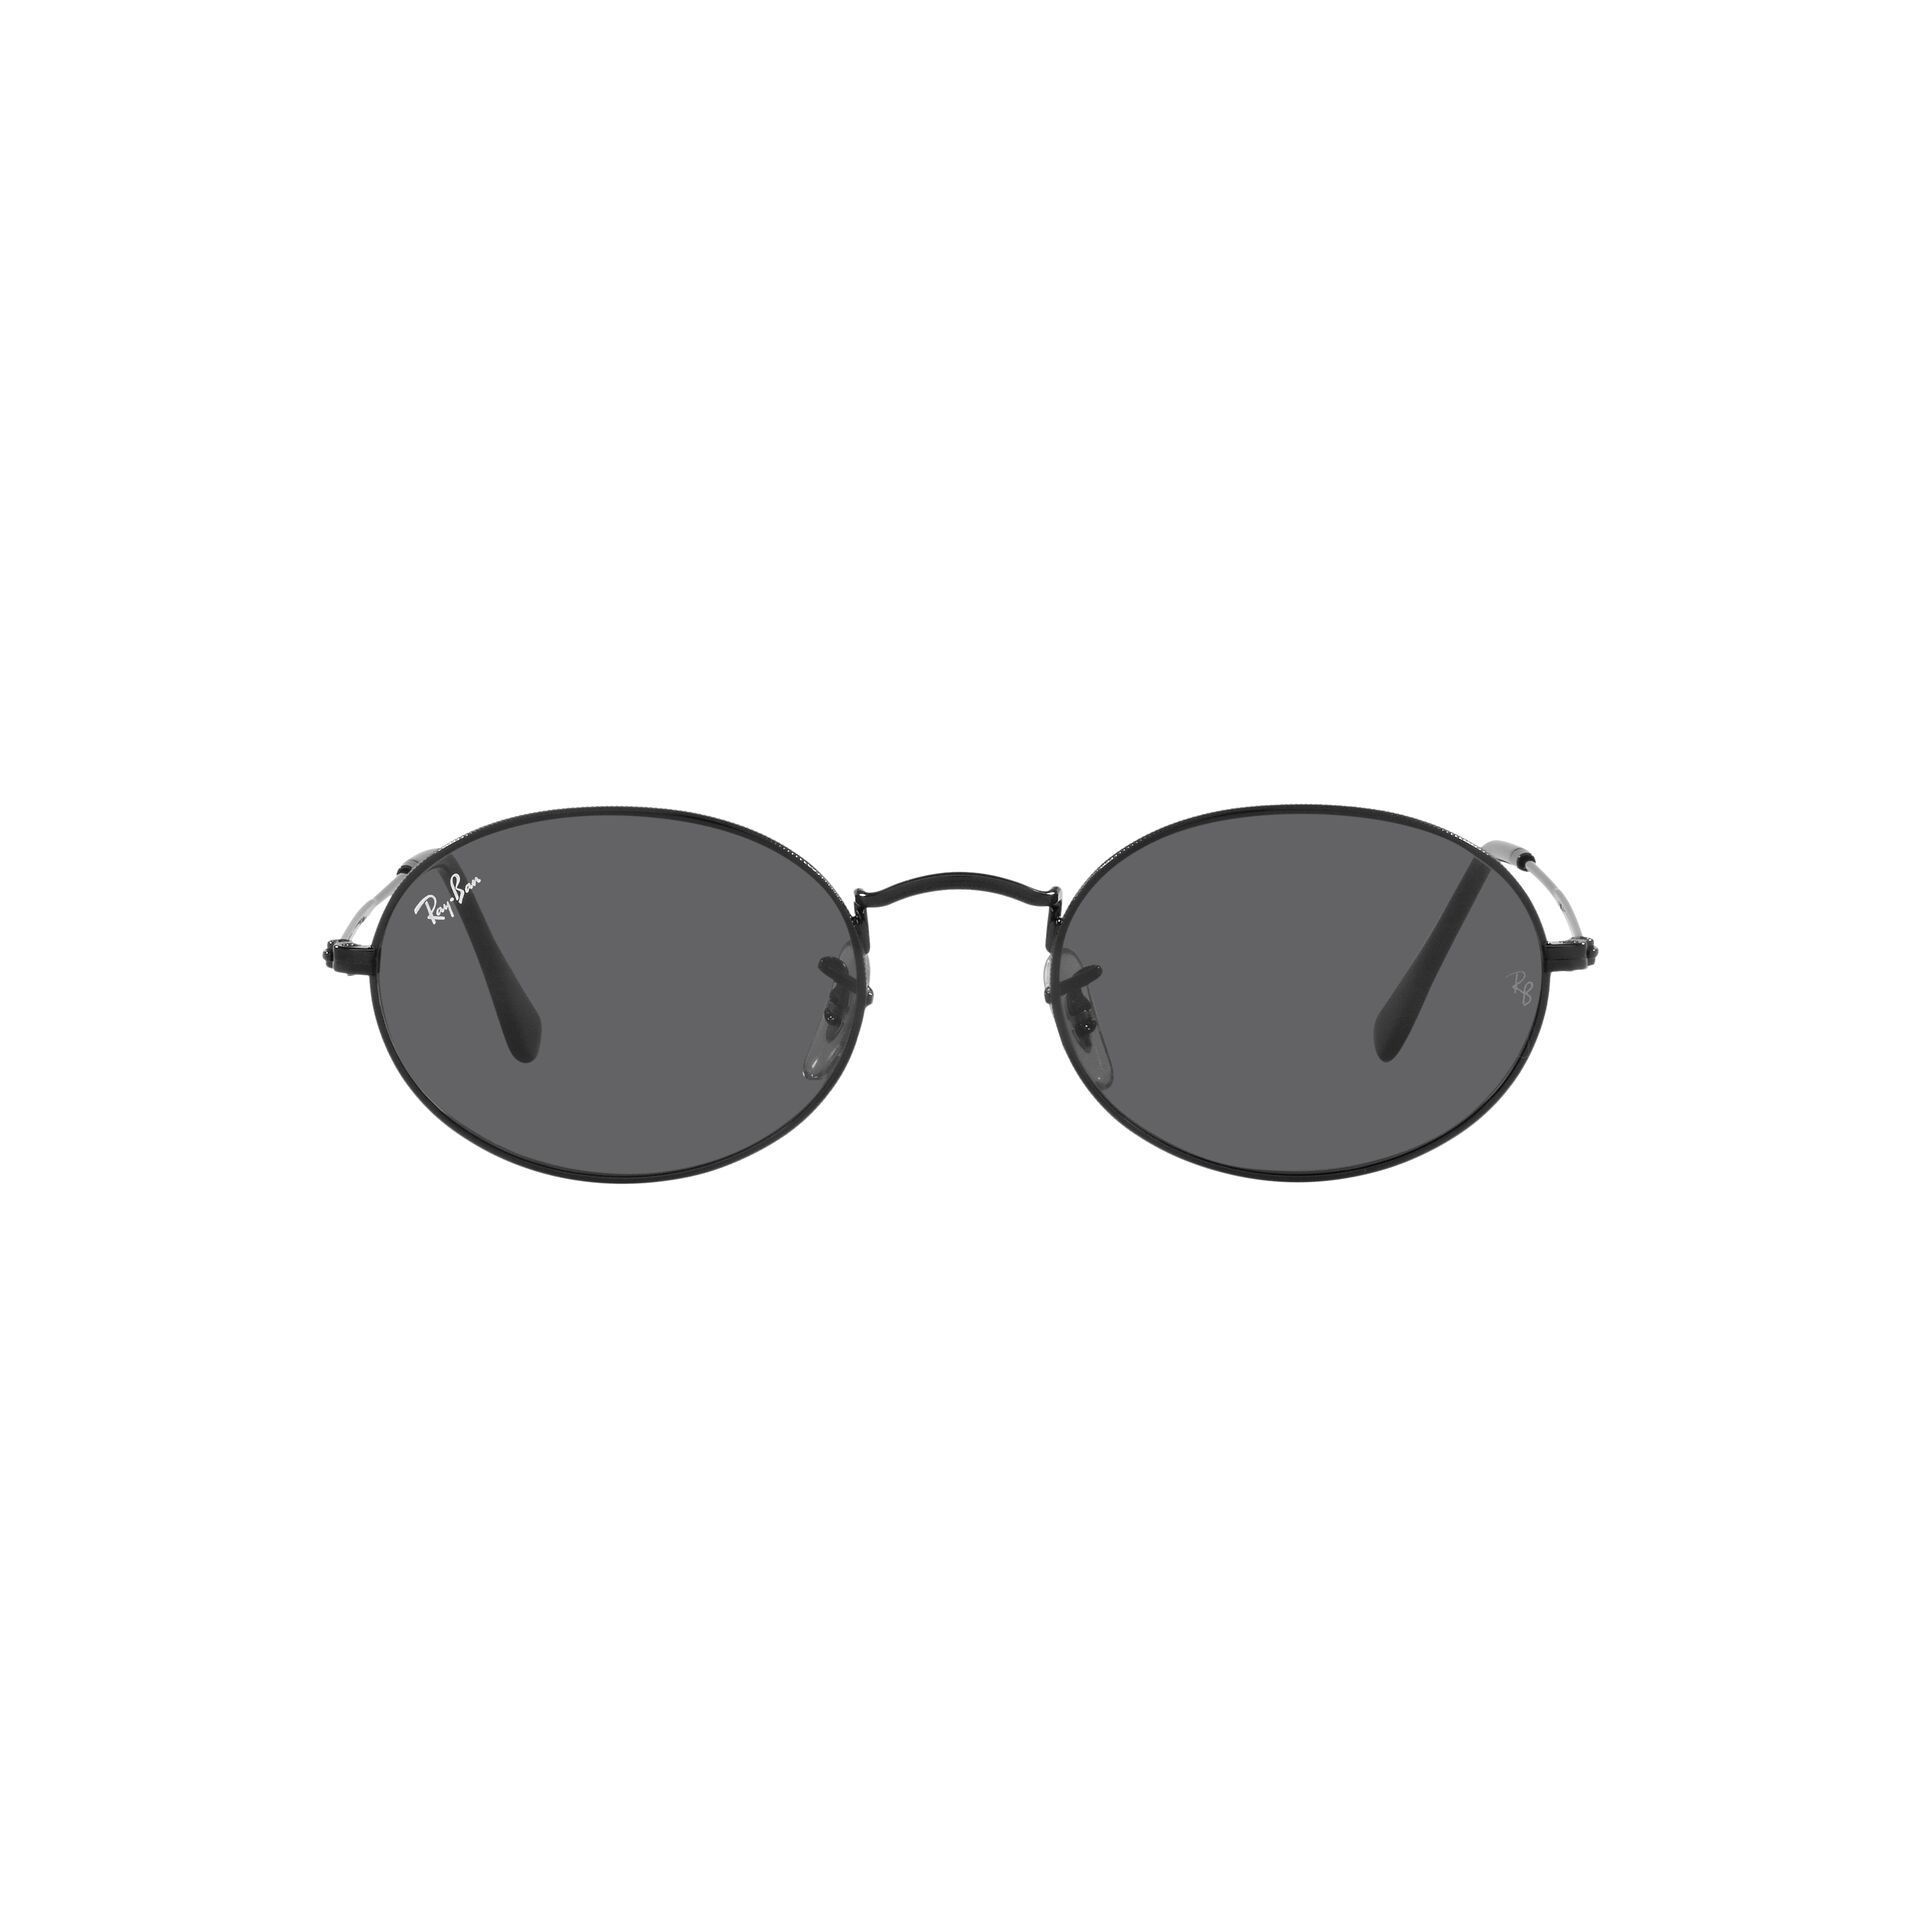 RB3547 Oval Sunglasses 002 B1 - size 51